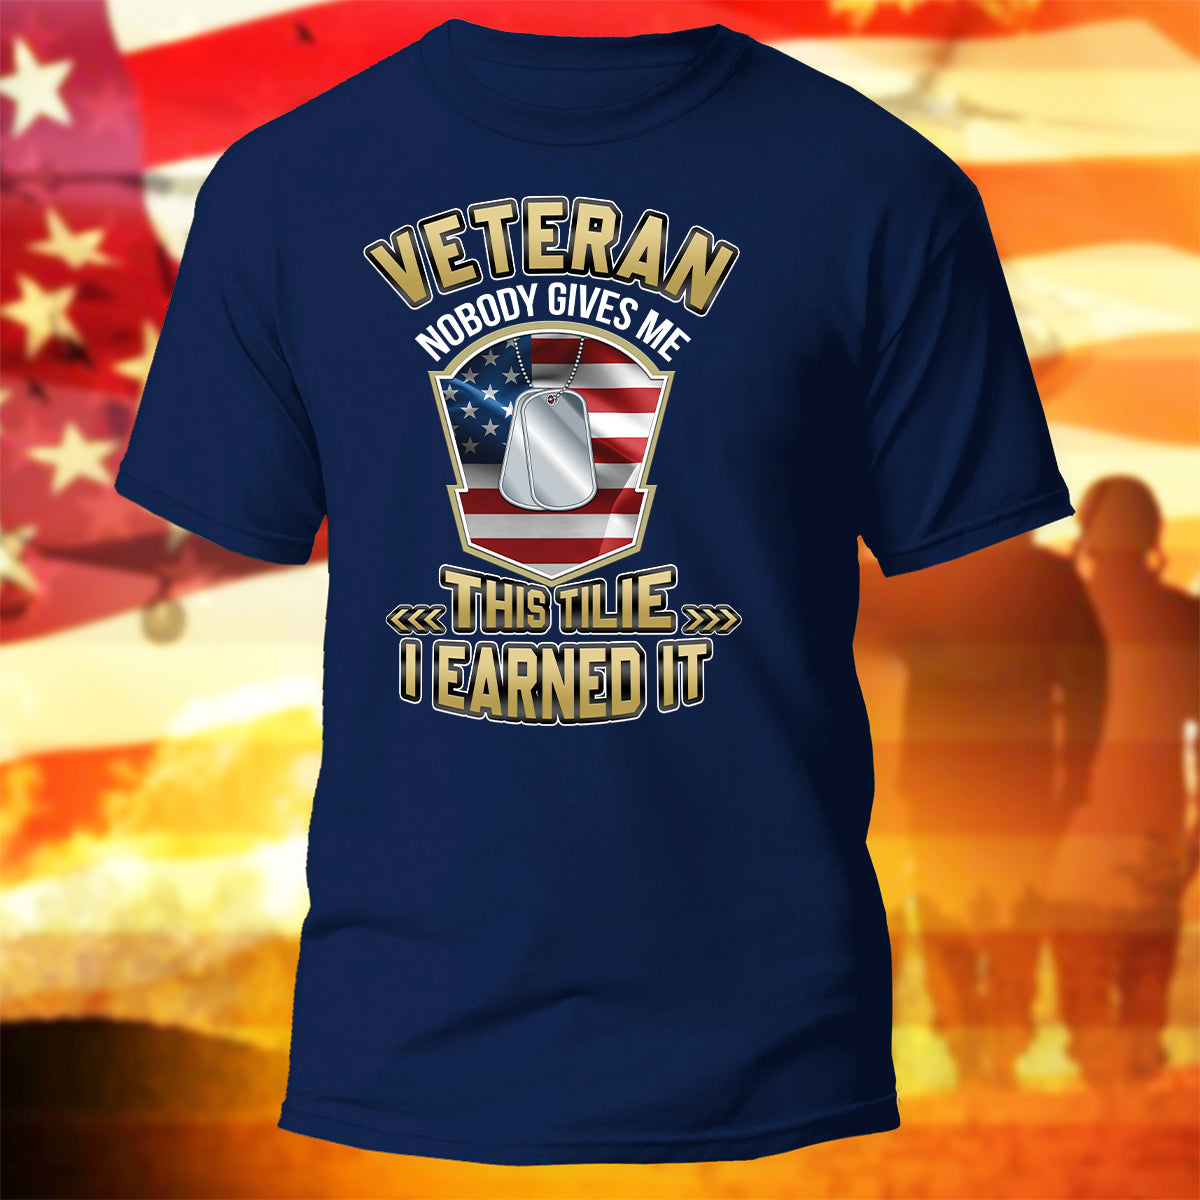 U.S Veteran T-Shirt Veteran Nobody Gives Me This Title I Earned It Shirt Veterans Gift